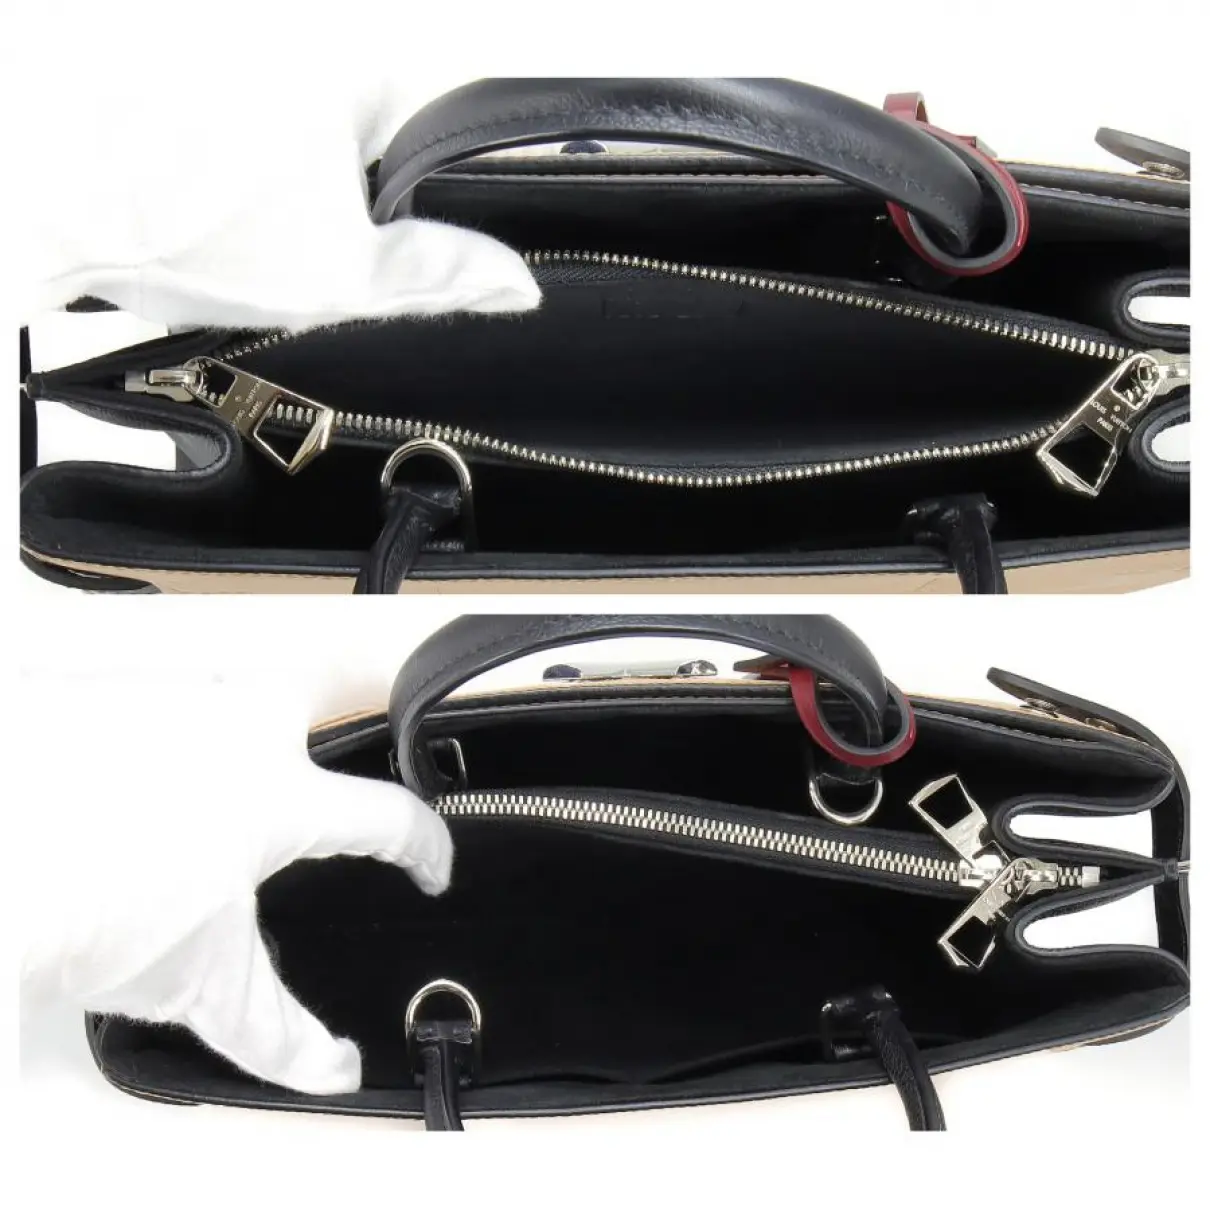 Twist leather handbag Louis Vuitton